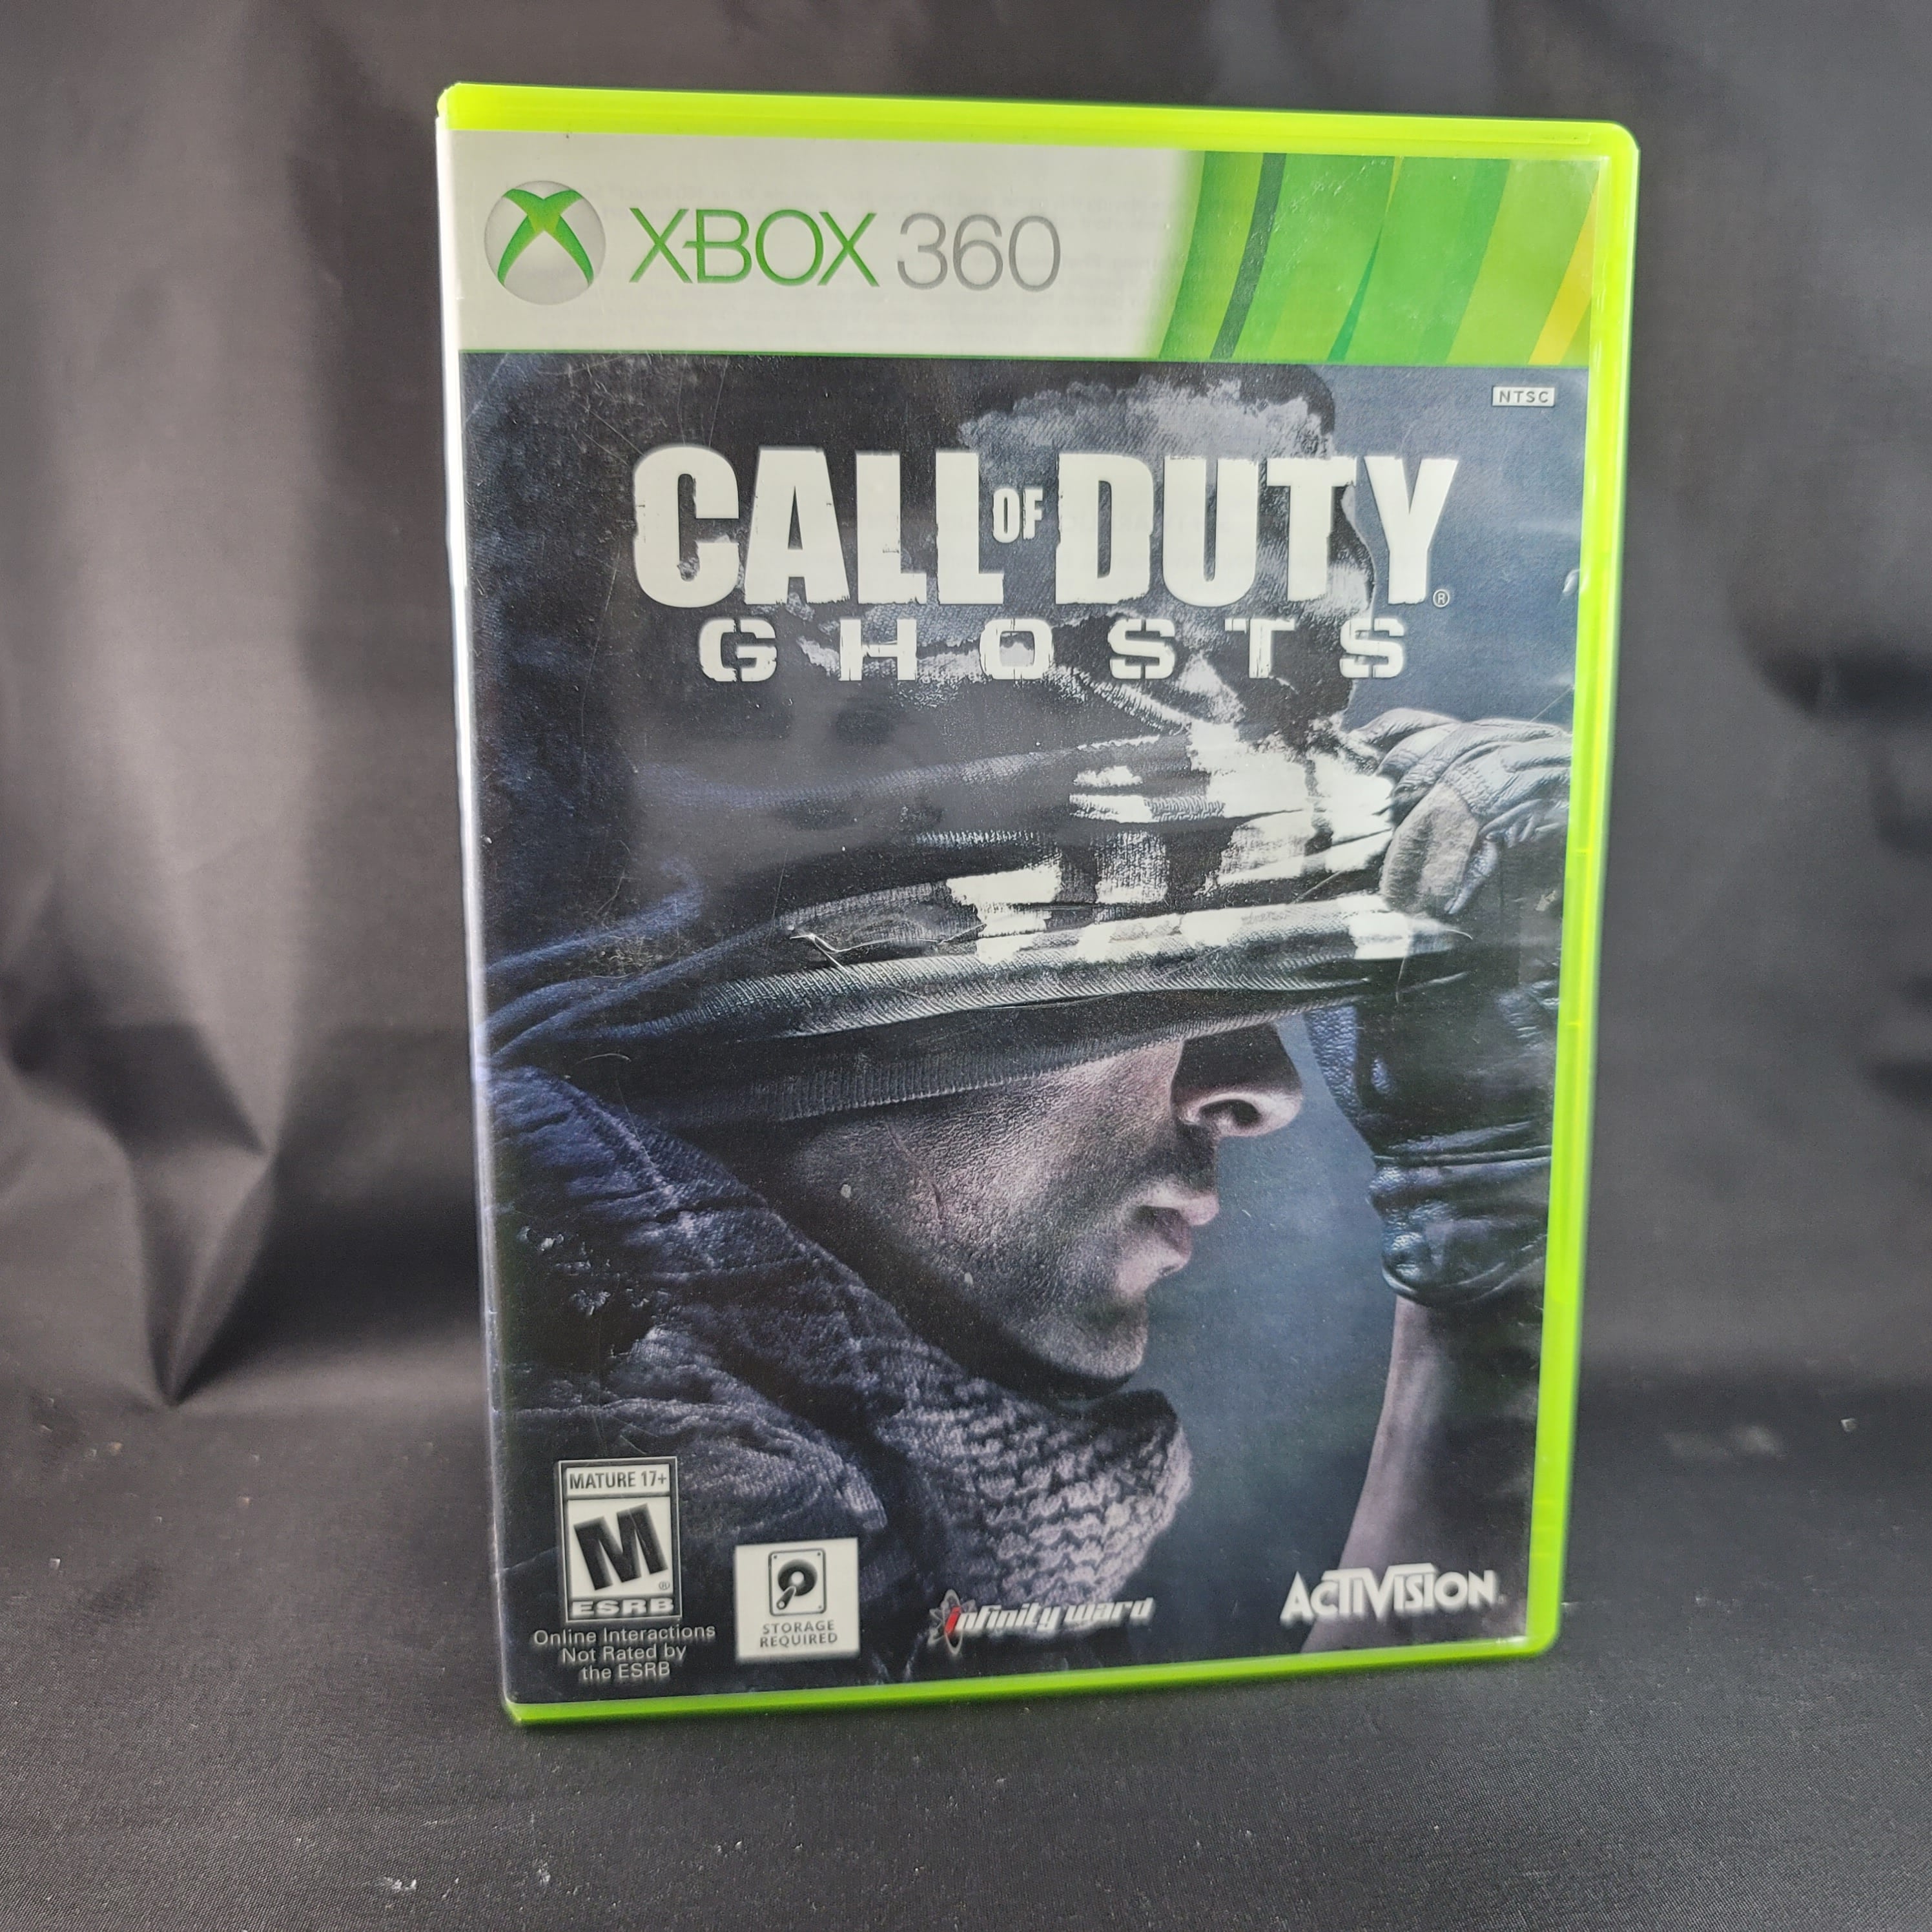 Call of Duty: Ghosts (Xbox 360) - Full Game 1080p60 HD Walkthrough